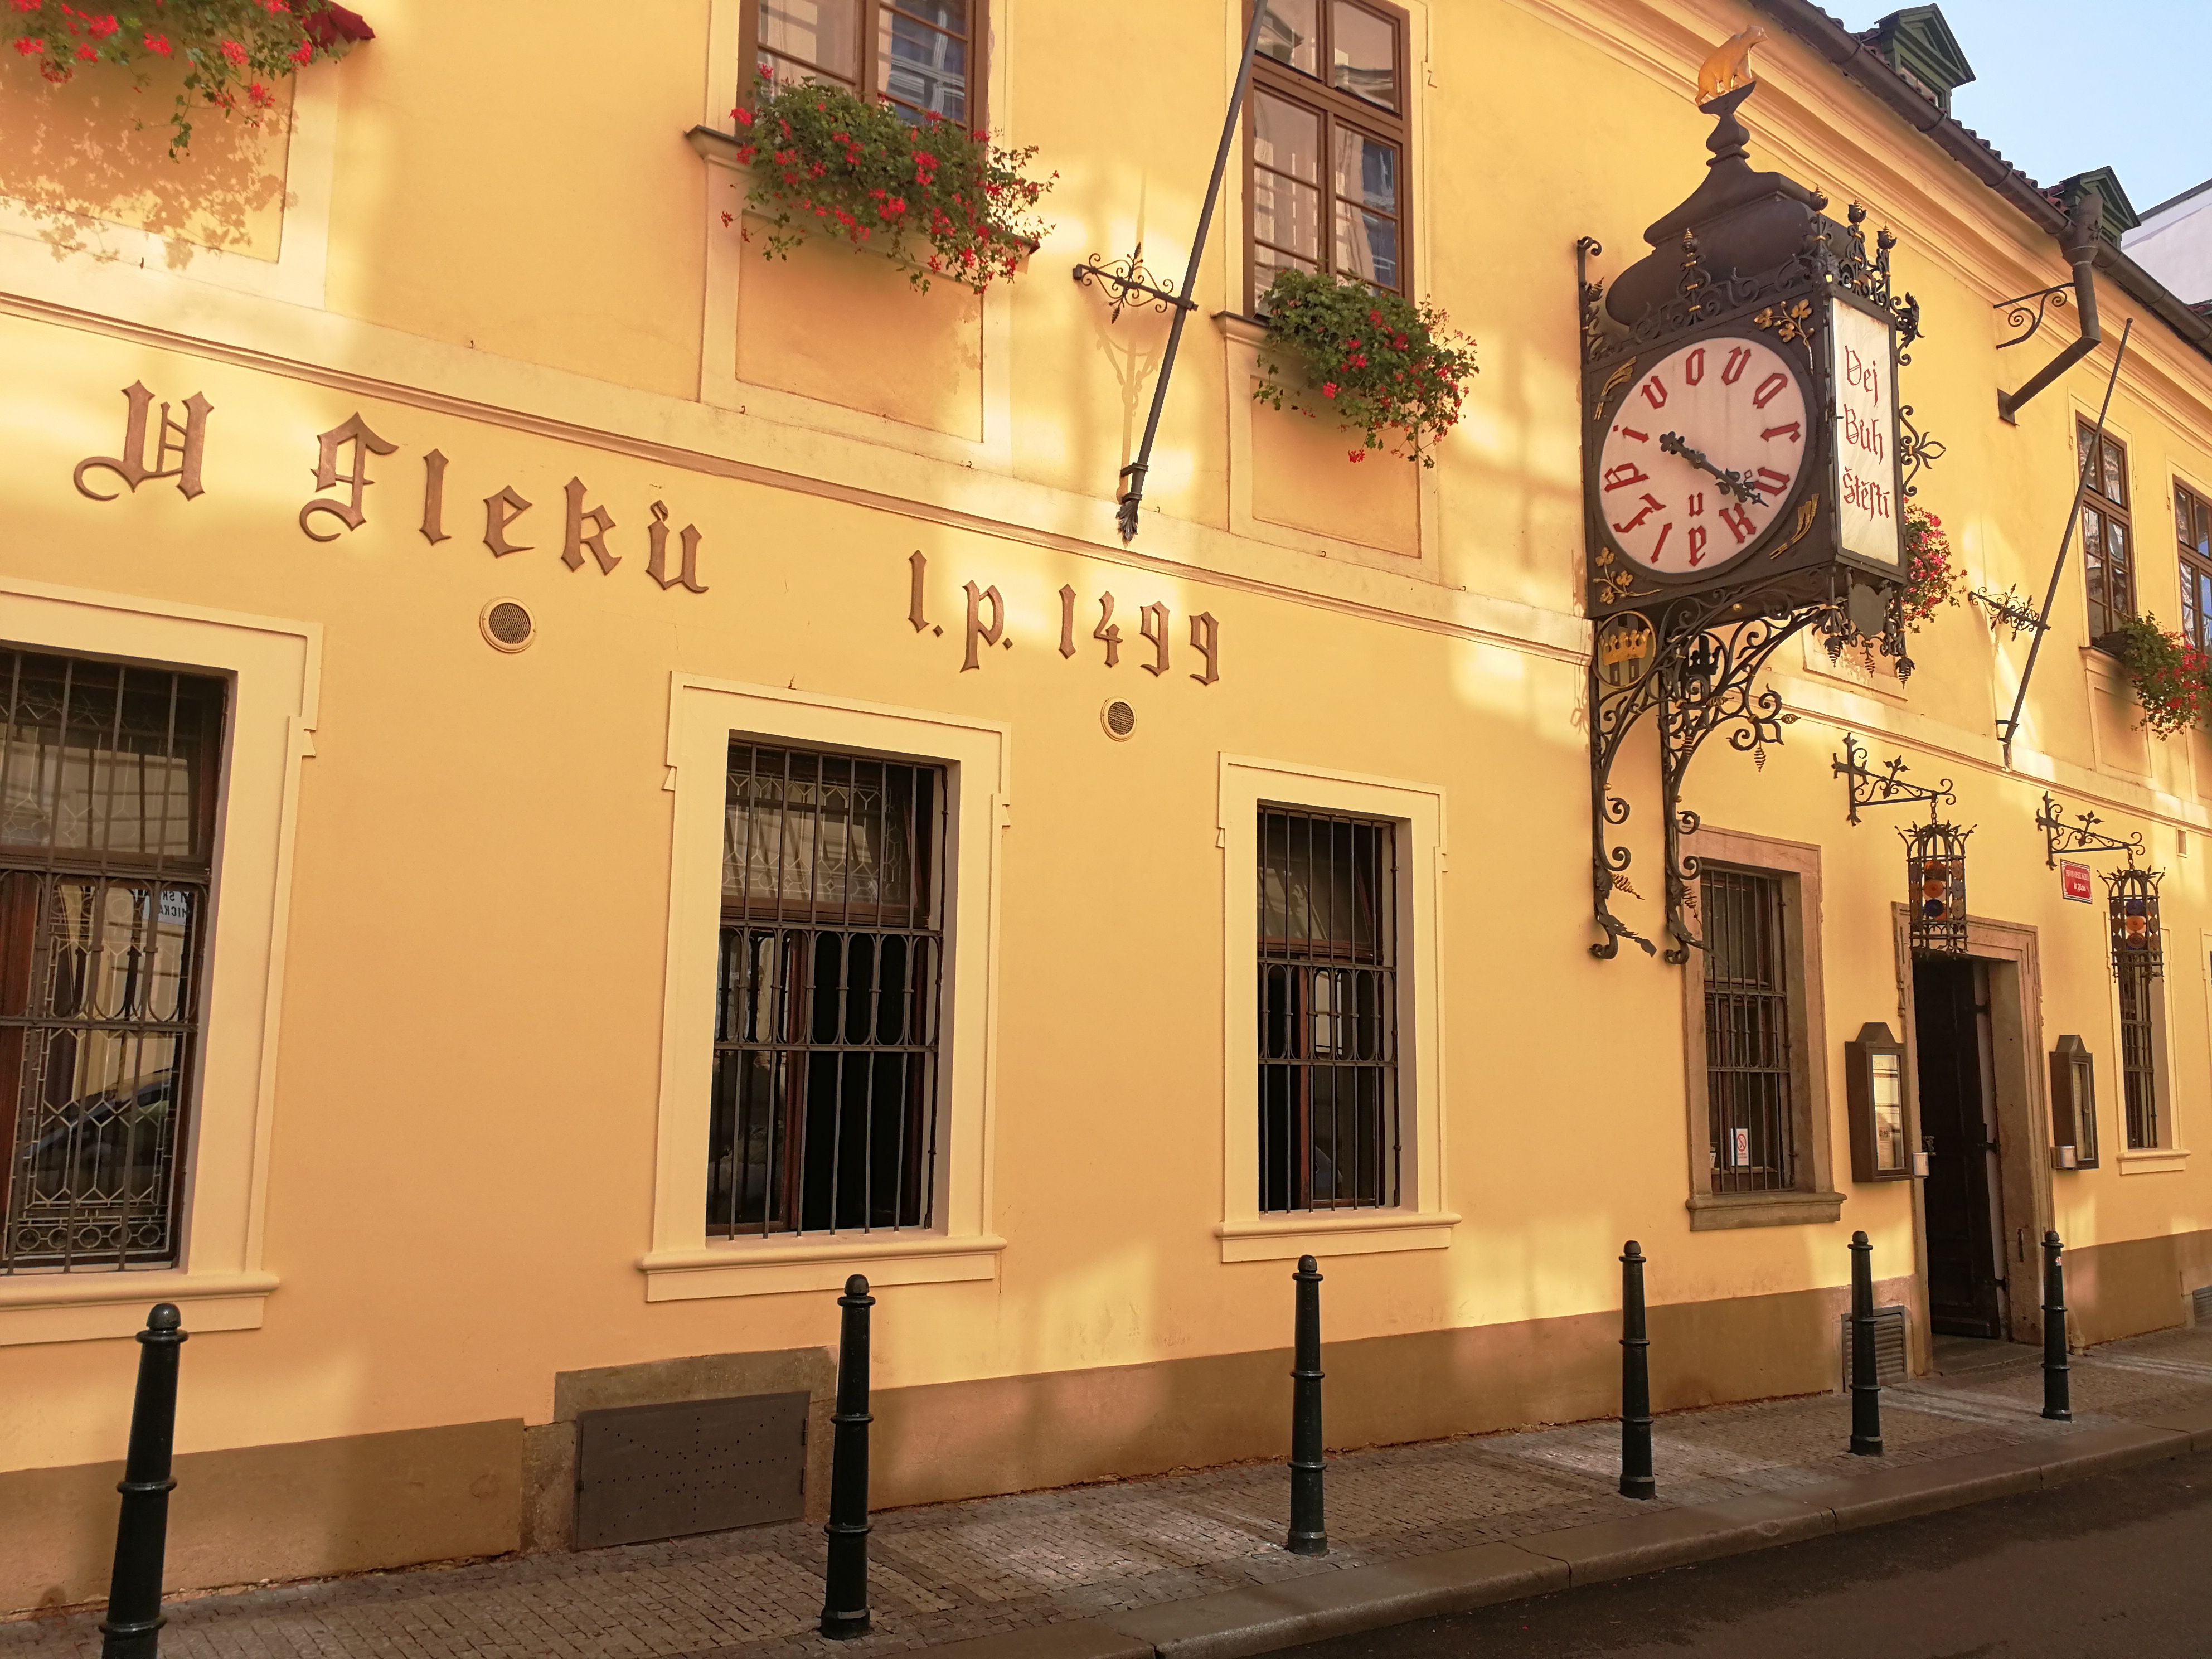 U Fleků, Restaurant and Brewery, Prague